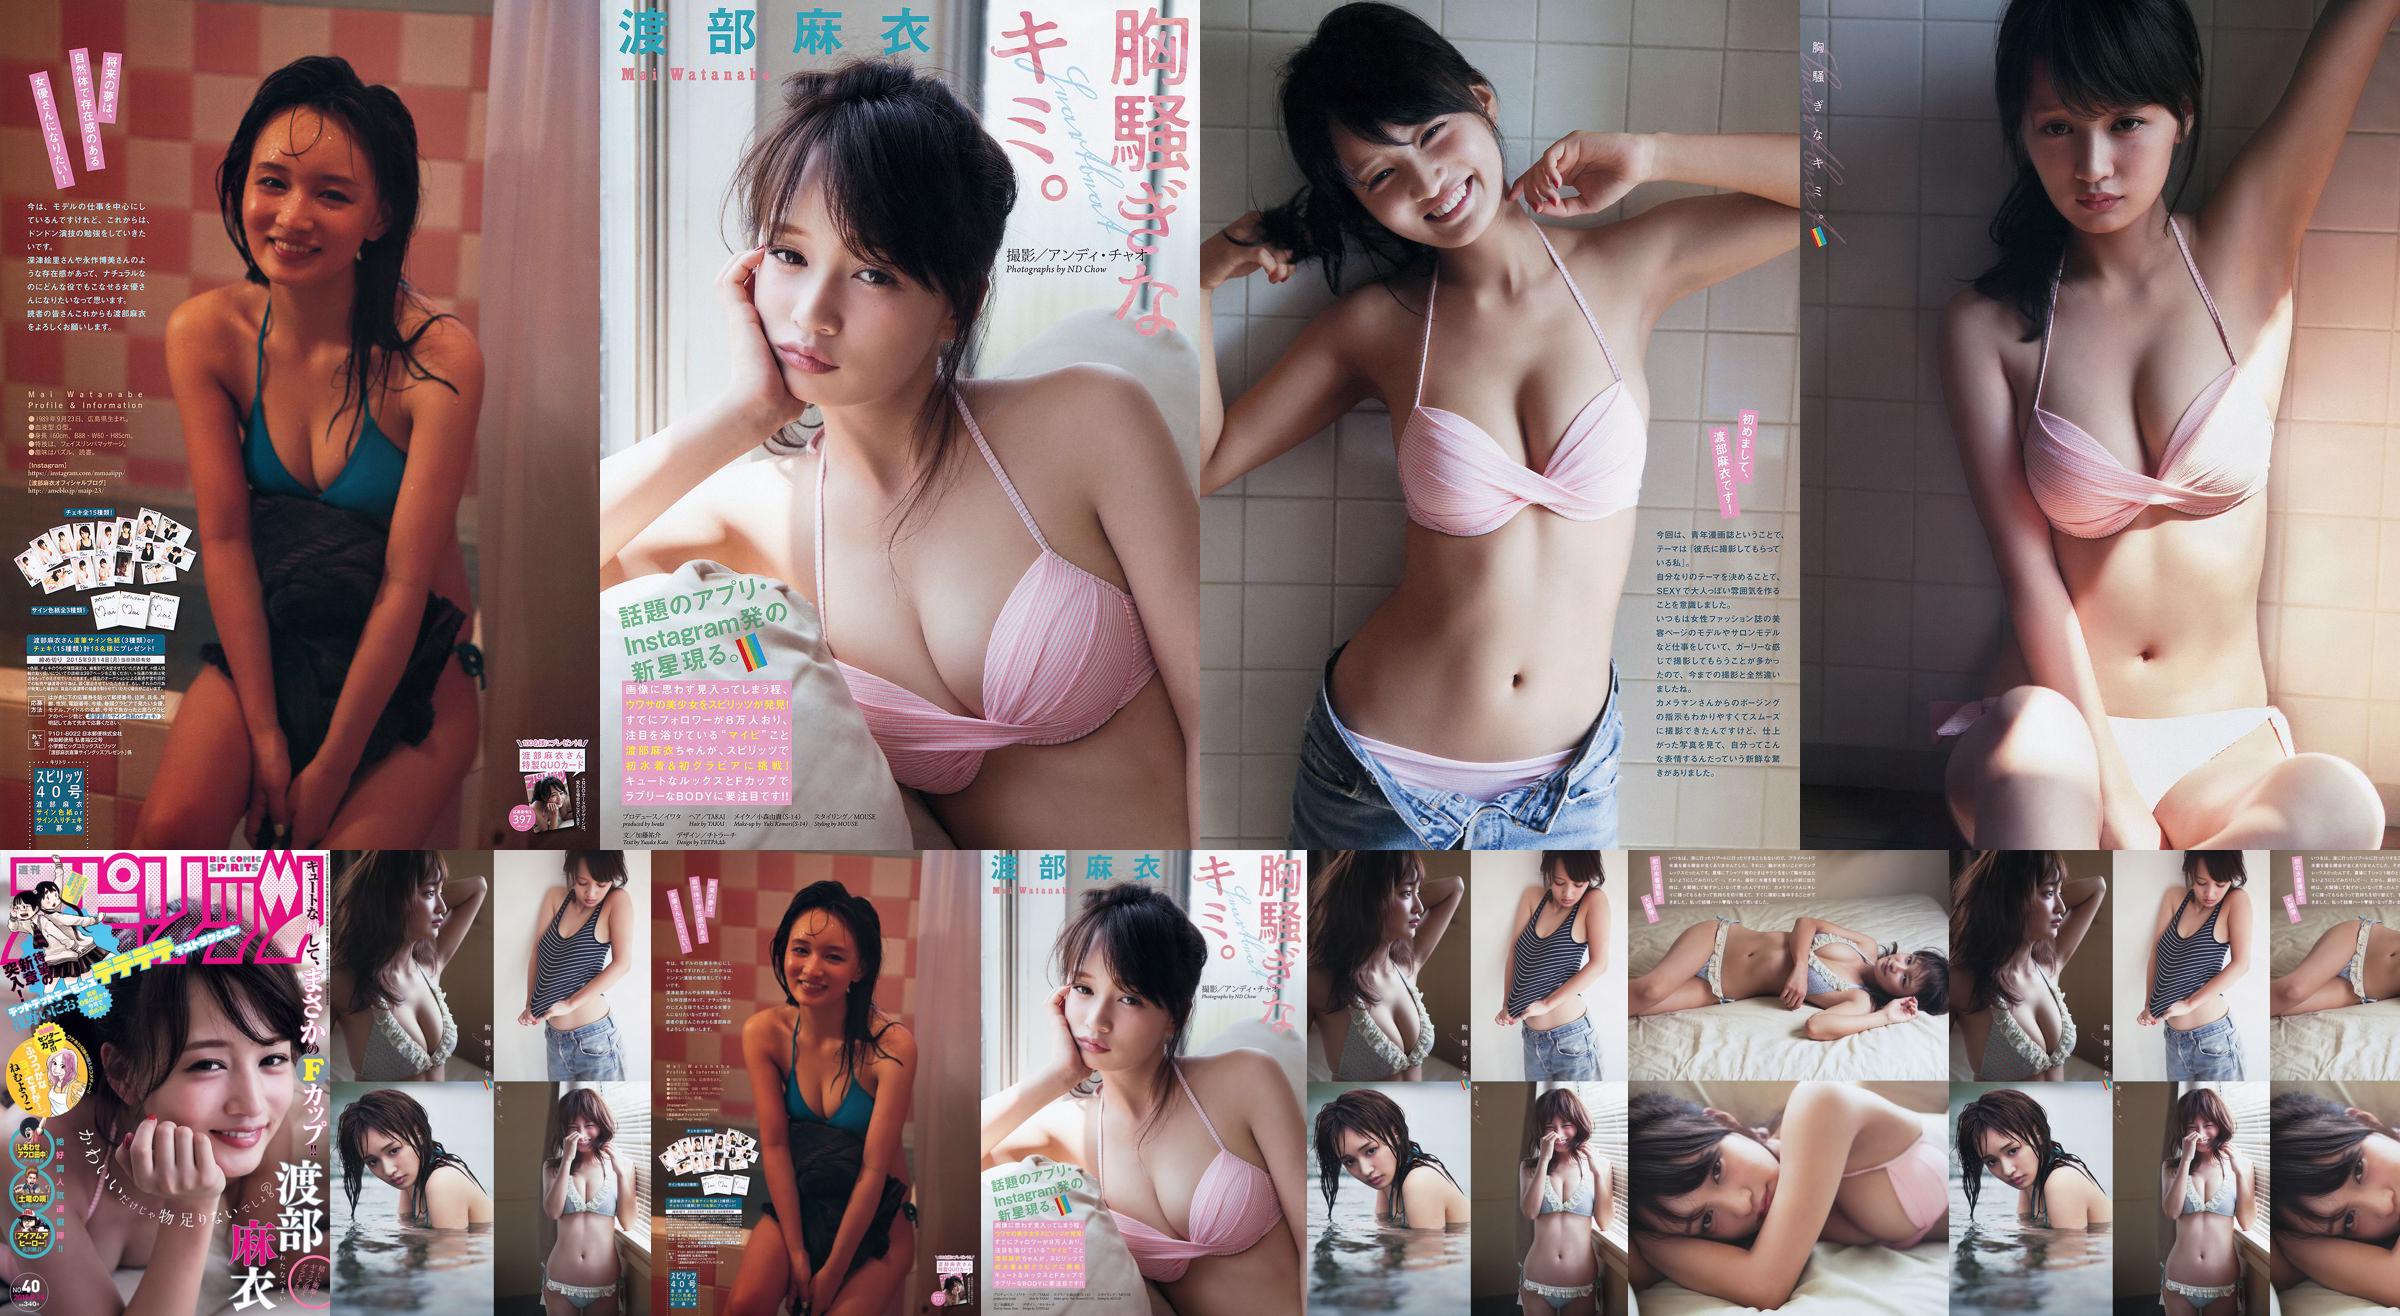 [Wöchentliche große Comic-Spirituosen] Watanabe Mai 2015 Nr. 40 Fotomagazin No.5bc7cb Seite 2